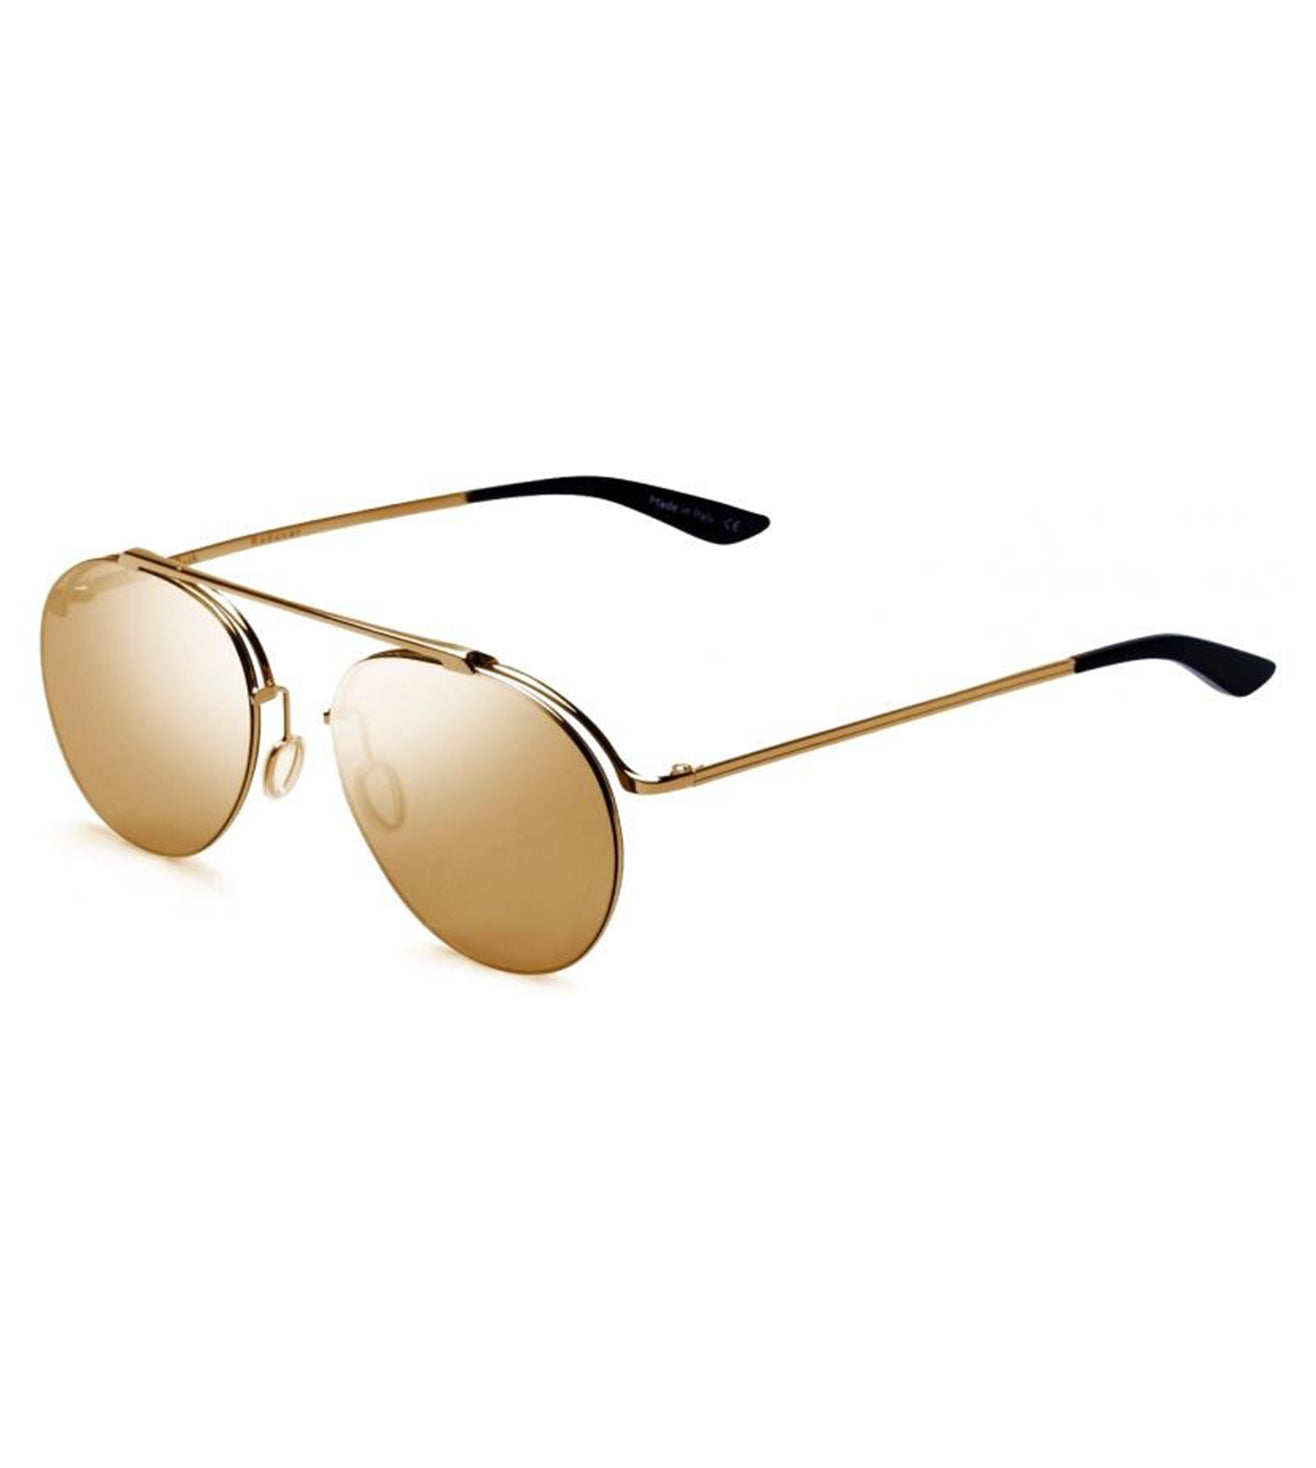 Christian Roth Unisex Gold Aviator Sunglasses